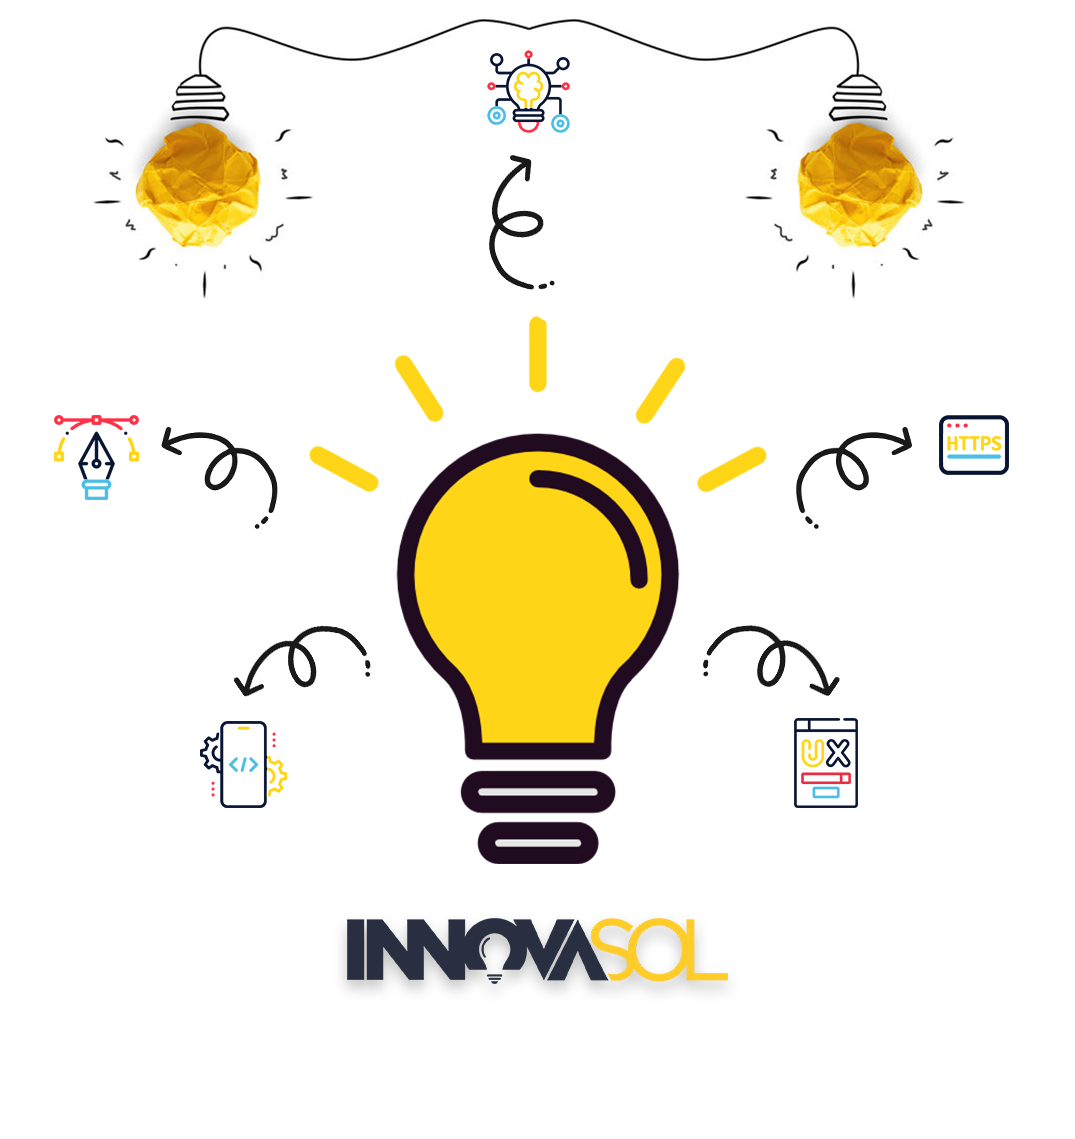 InnovaSol – Just another WordPress site